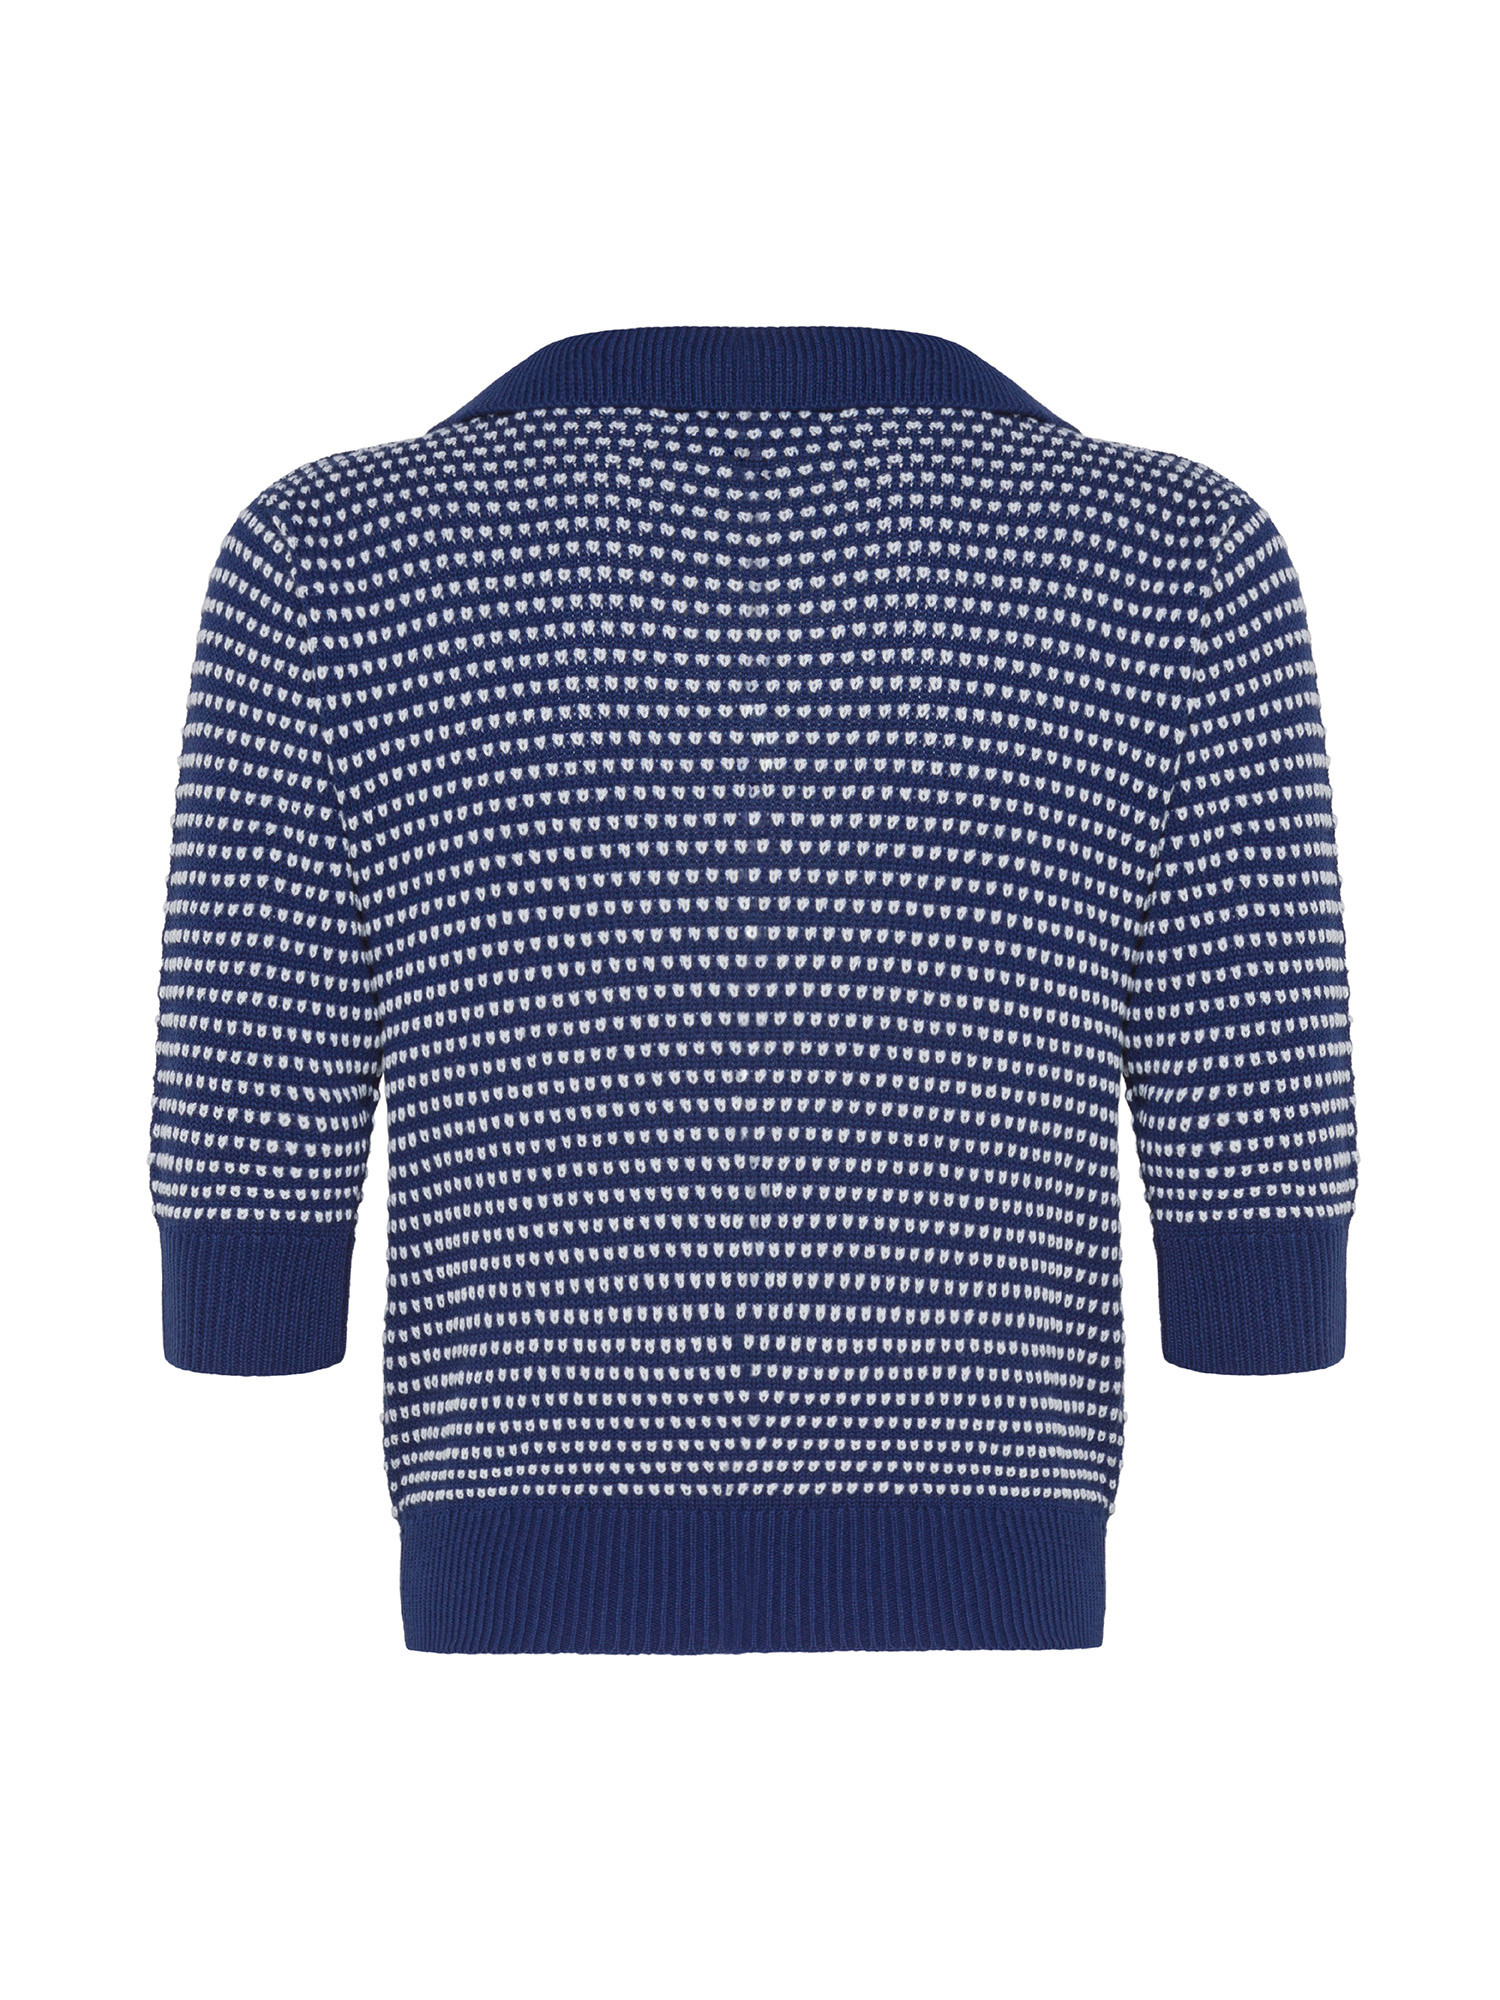 Koan - Short two-tone sweater, Dark Blue, large image number 1